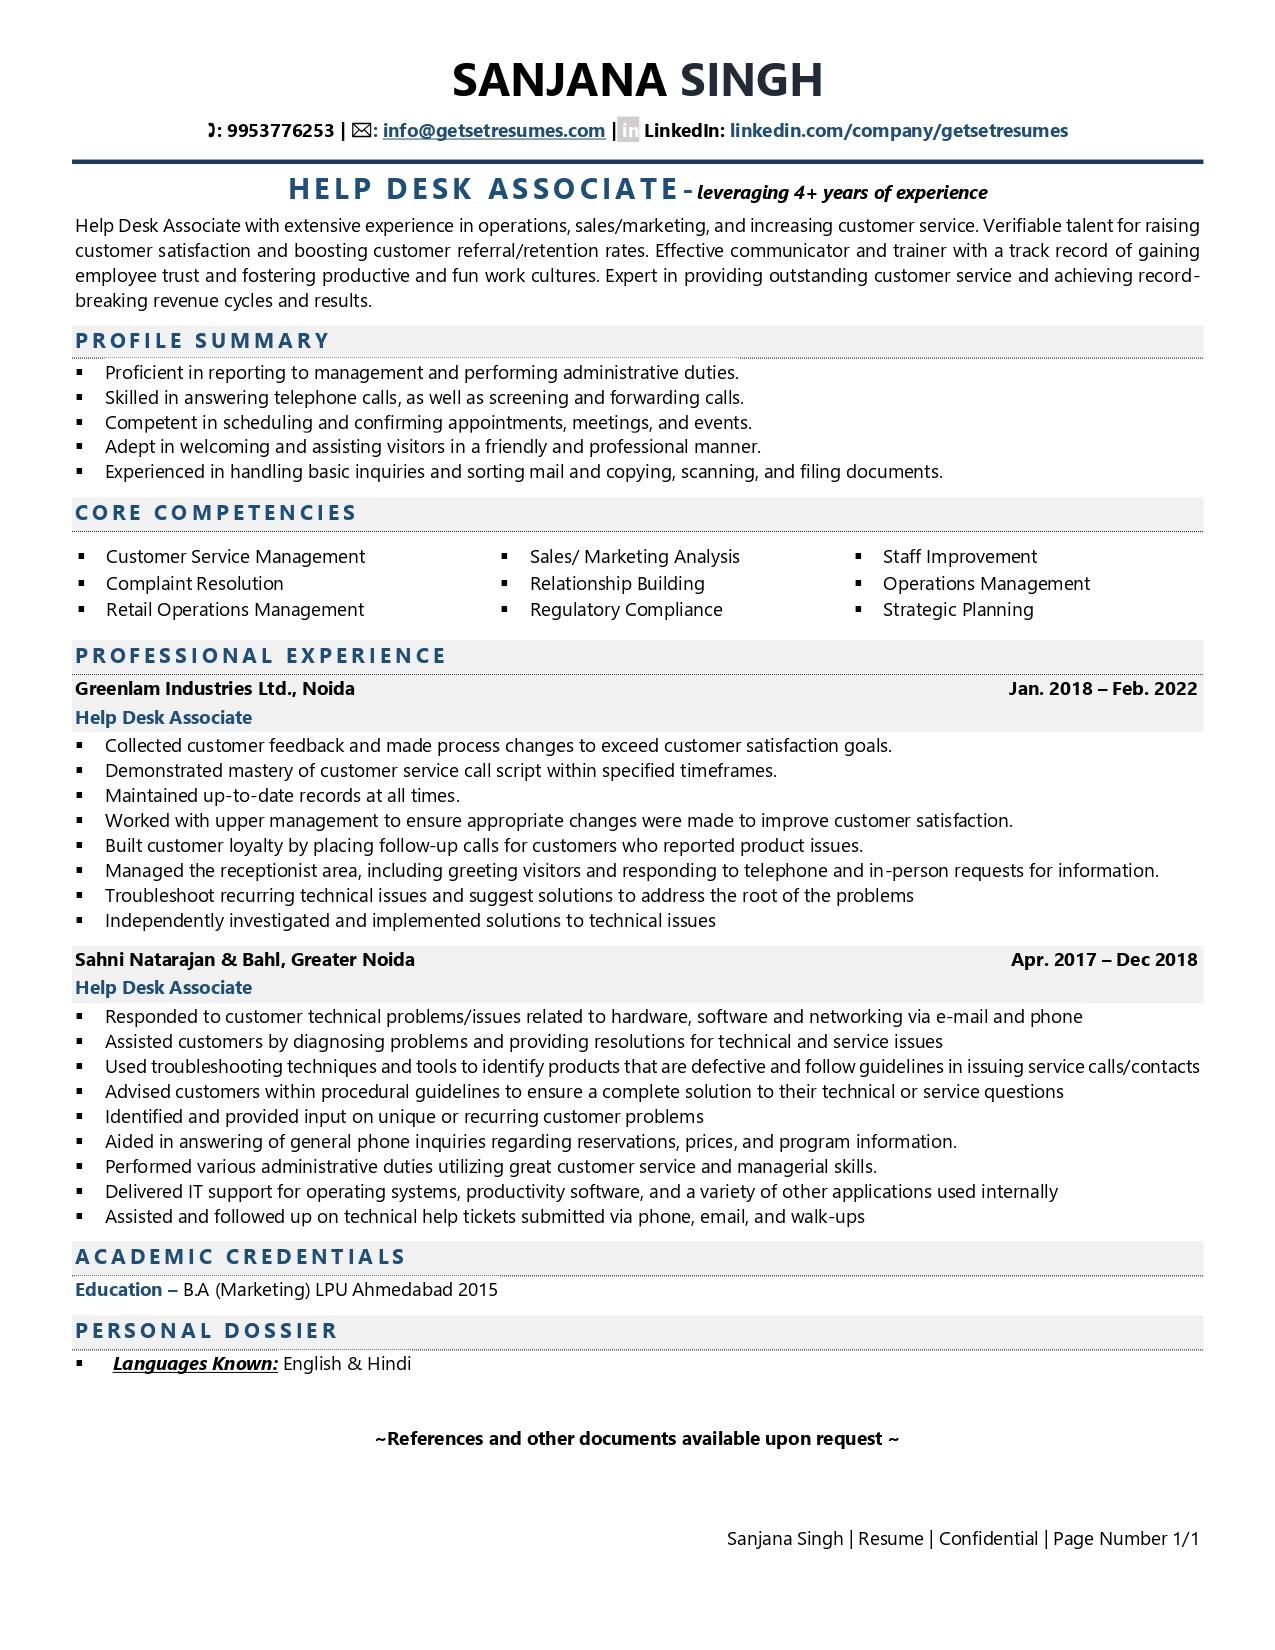 Help Desk Associate - Resume Example & Template